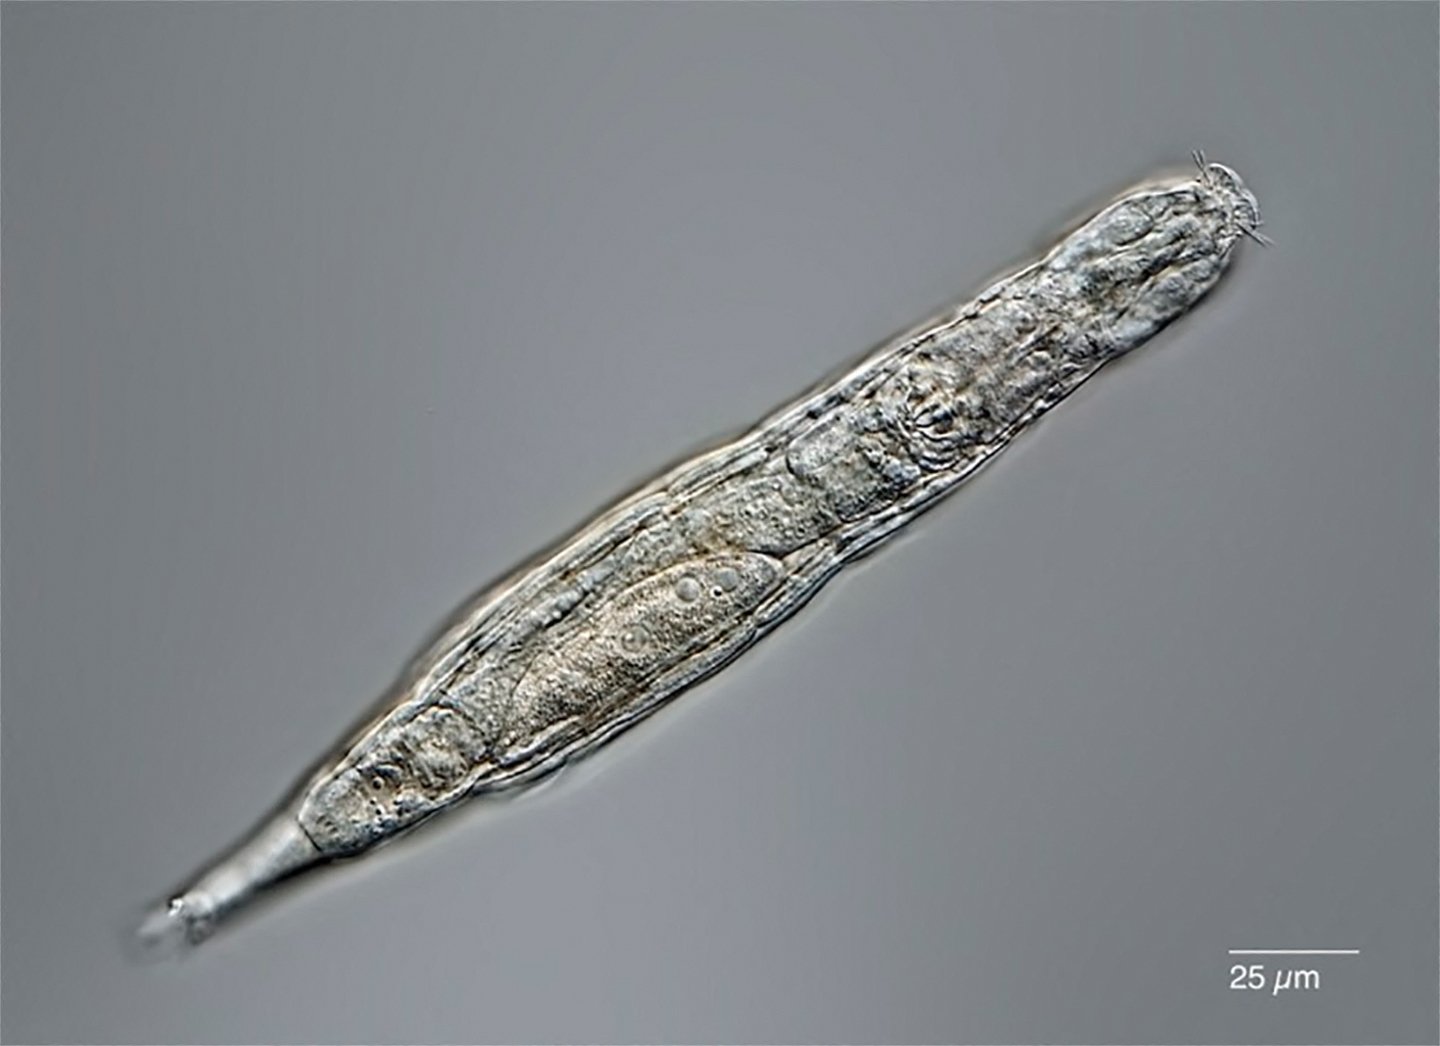 An up-close image shows a rotifier, a microscopic animal. (Michael Plewka via AFP)